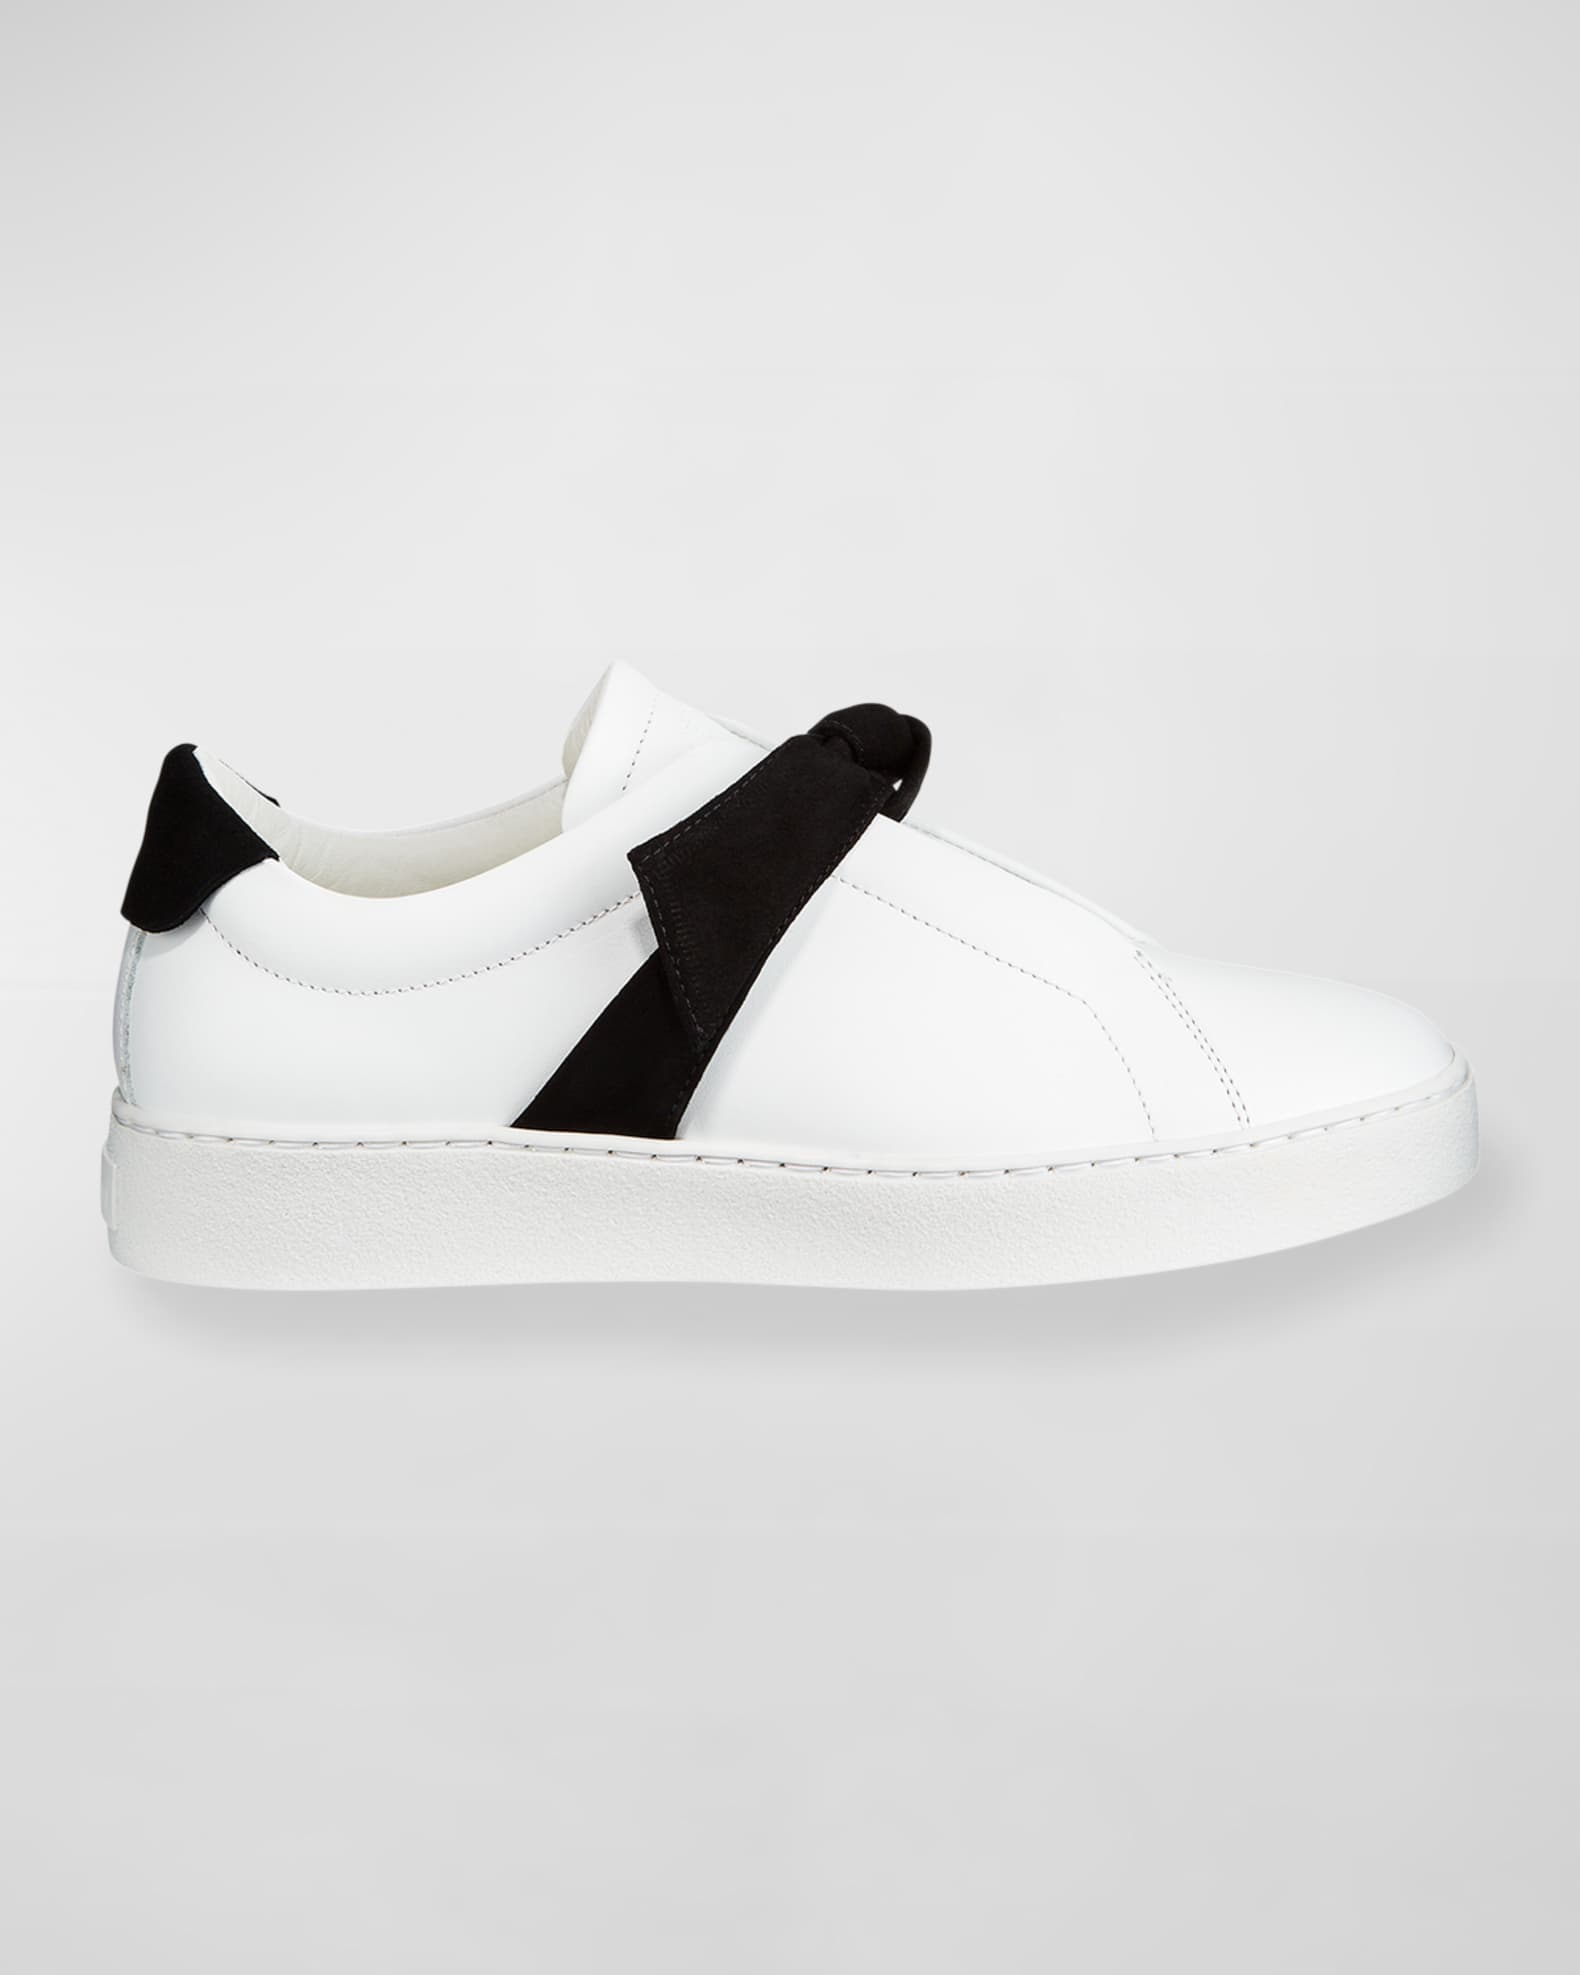 Alexandre Birman Clarita Two-Tone Sneakers, White/Black | Neiman Marcus